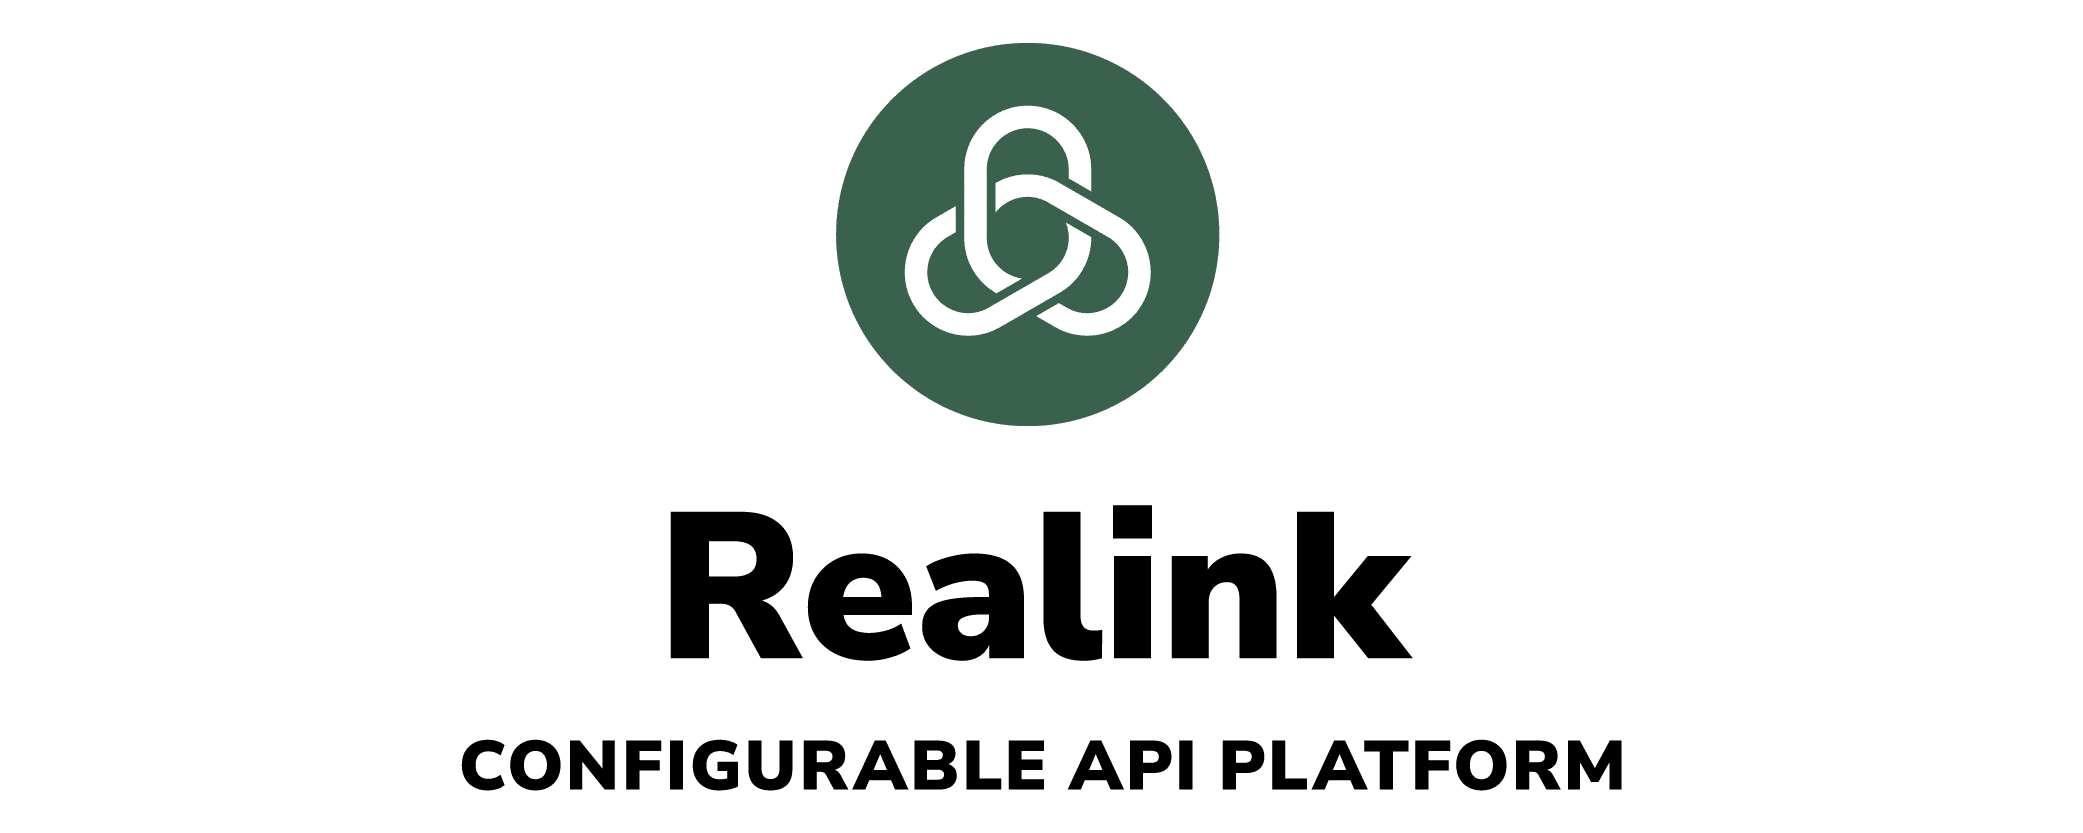 Realink Configurable API Platform